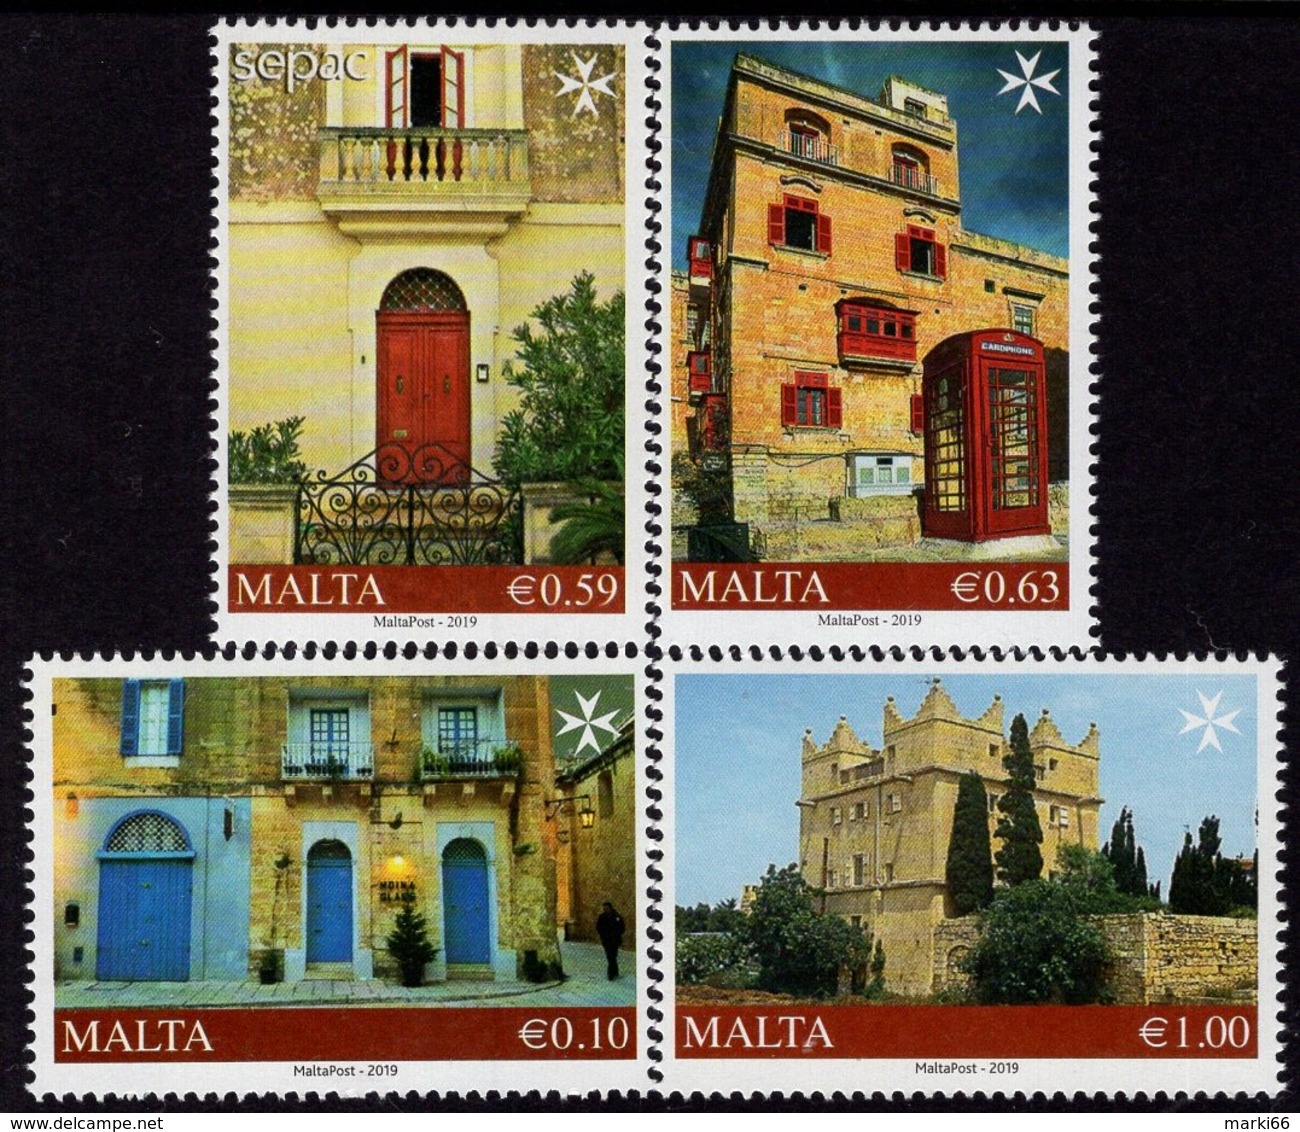 Malta - 2019 - SEPAC - Old Residential Houses - Mint Stamp Set - Malta